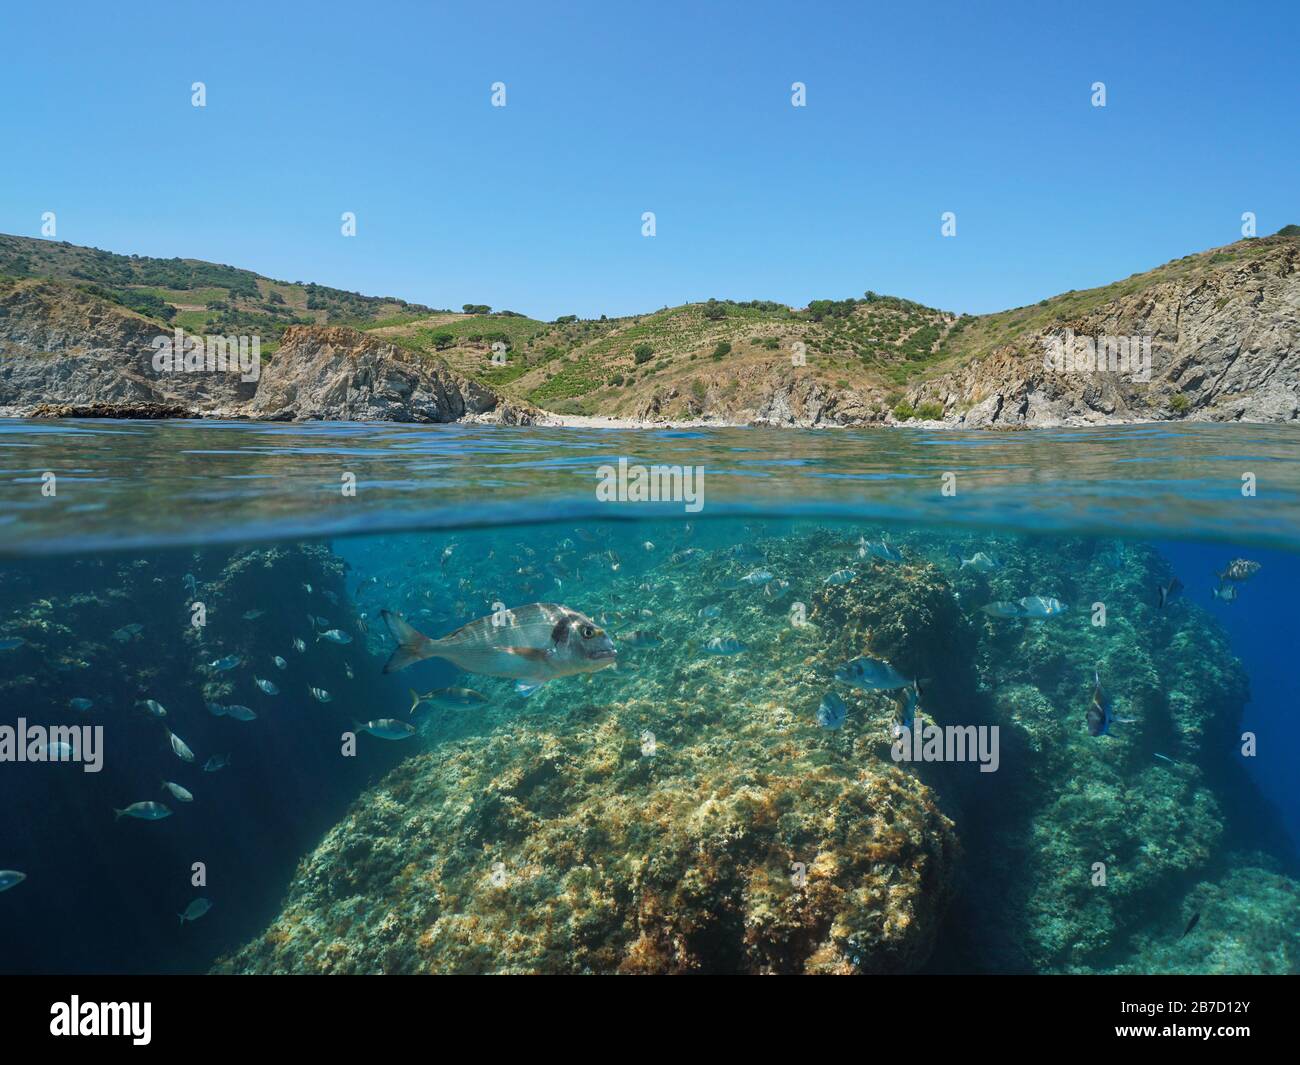 Mediterranean sea, fish underwater and rocky coastline in Marine reserve of Cerbere Banyuls, split view over under water surface, Occitanie, France Stock Photo